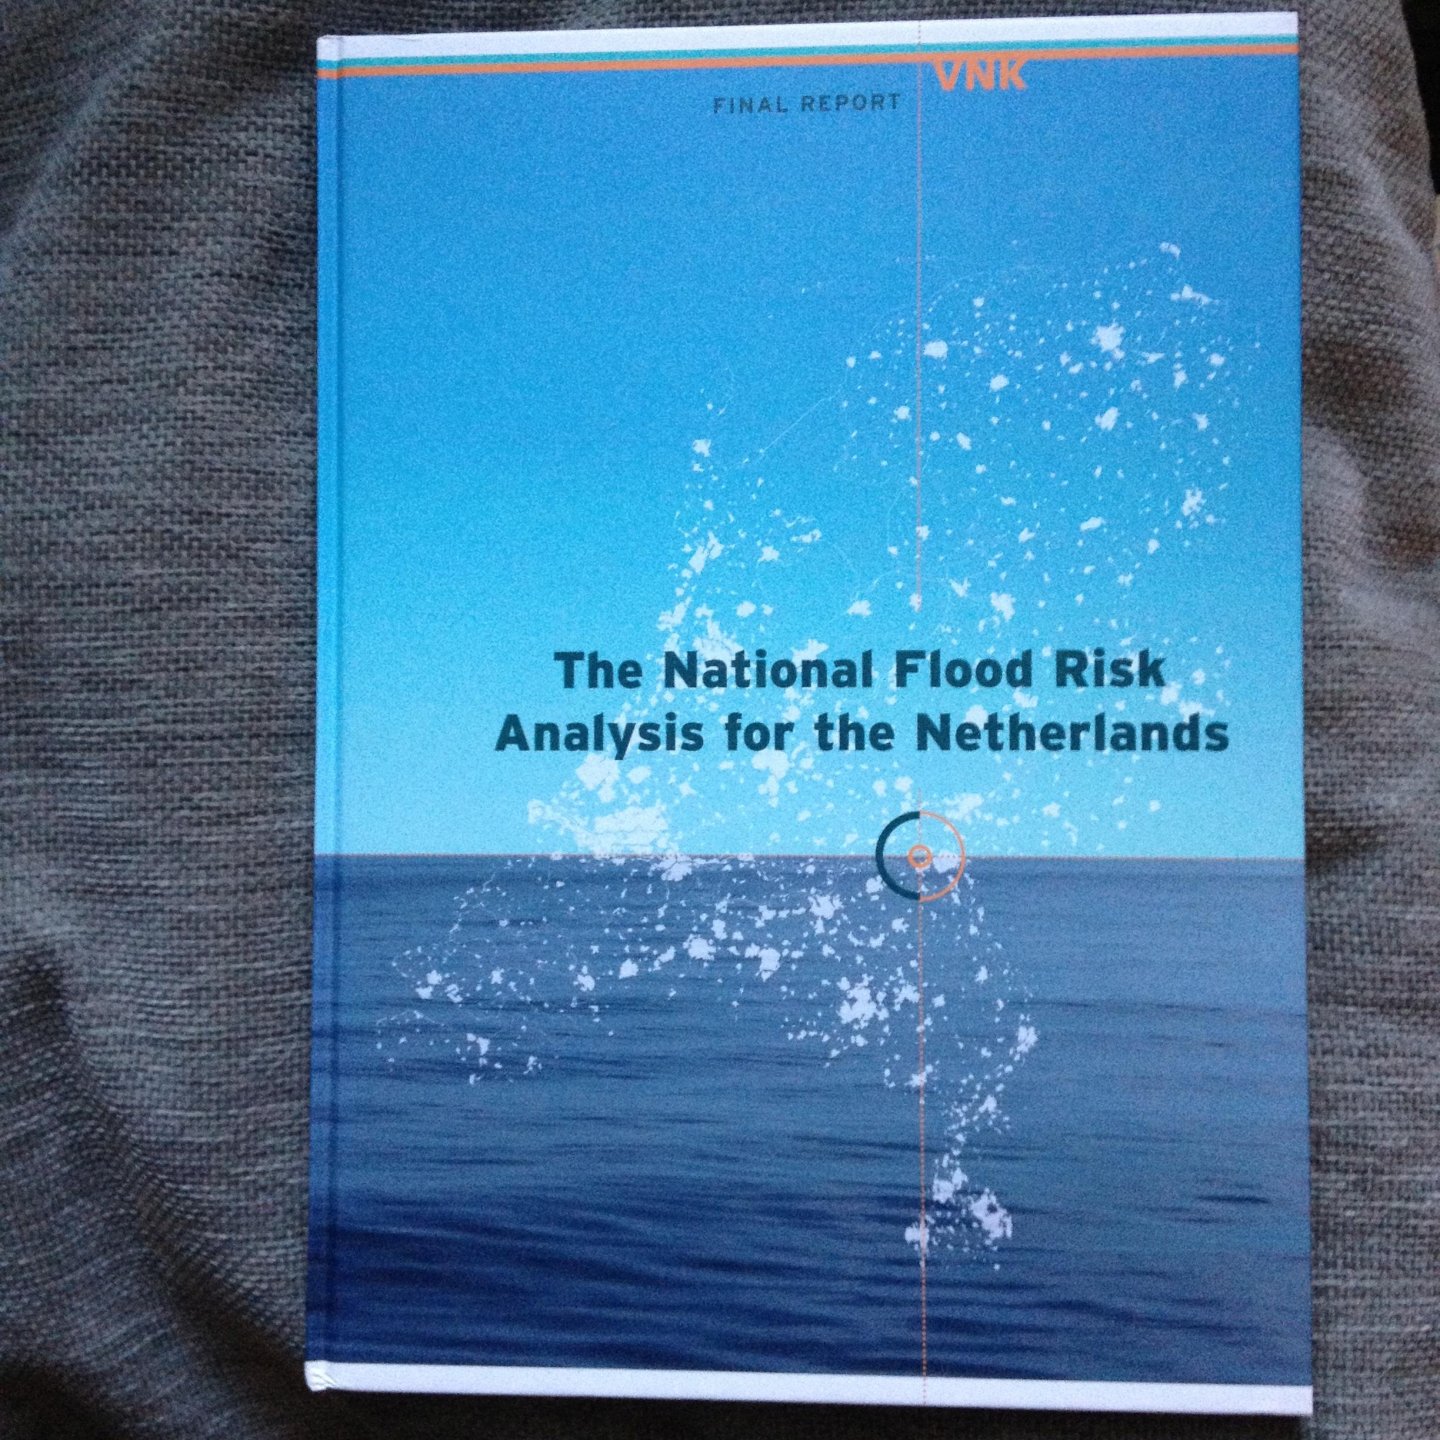 R. Vergouwe, H. Sarink - The National Flood Risk Analysis for the Netherlands - Final Report VNK